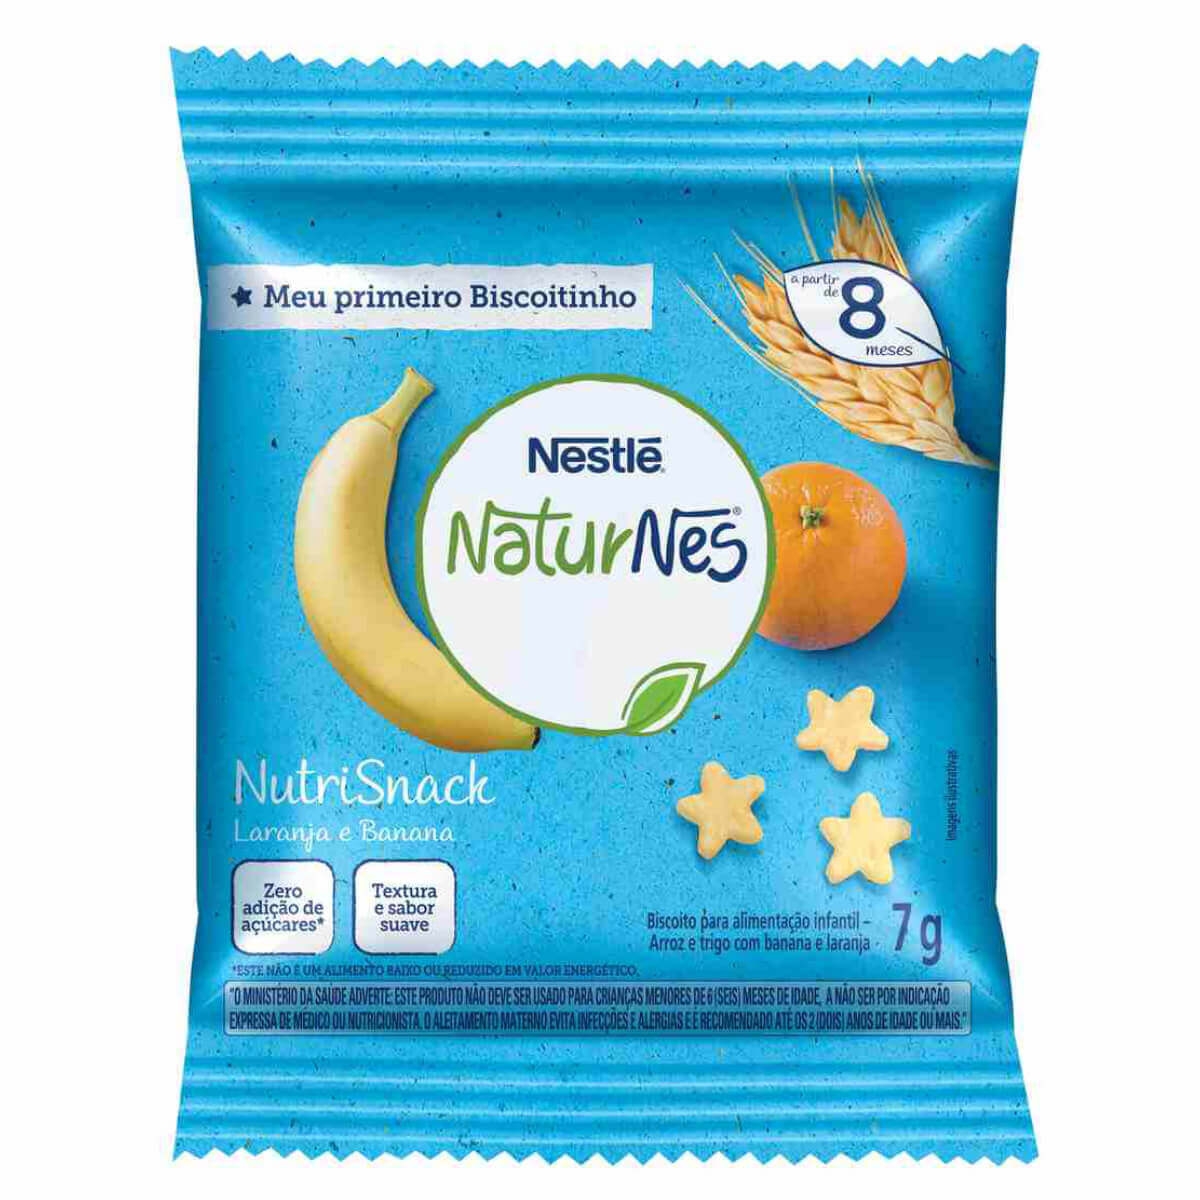 Nutrisnack Nestlé Naturnes Banana e Laranja 7g